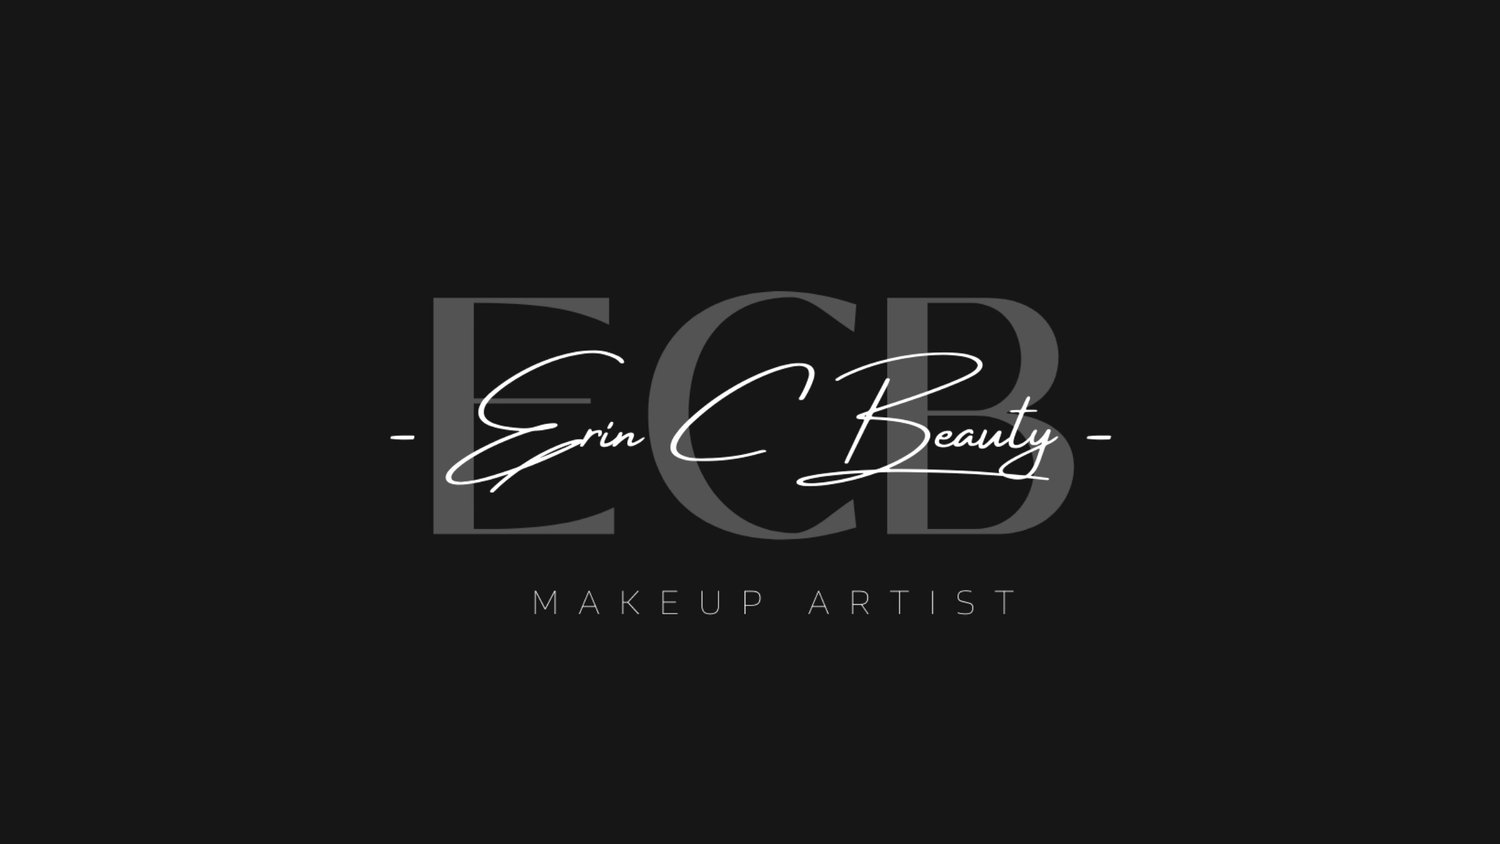 Erin C Beauty